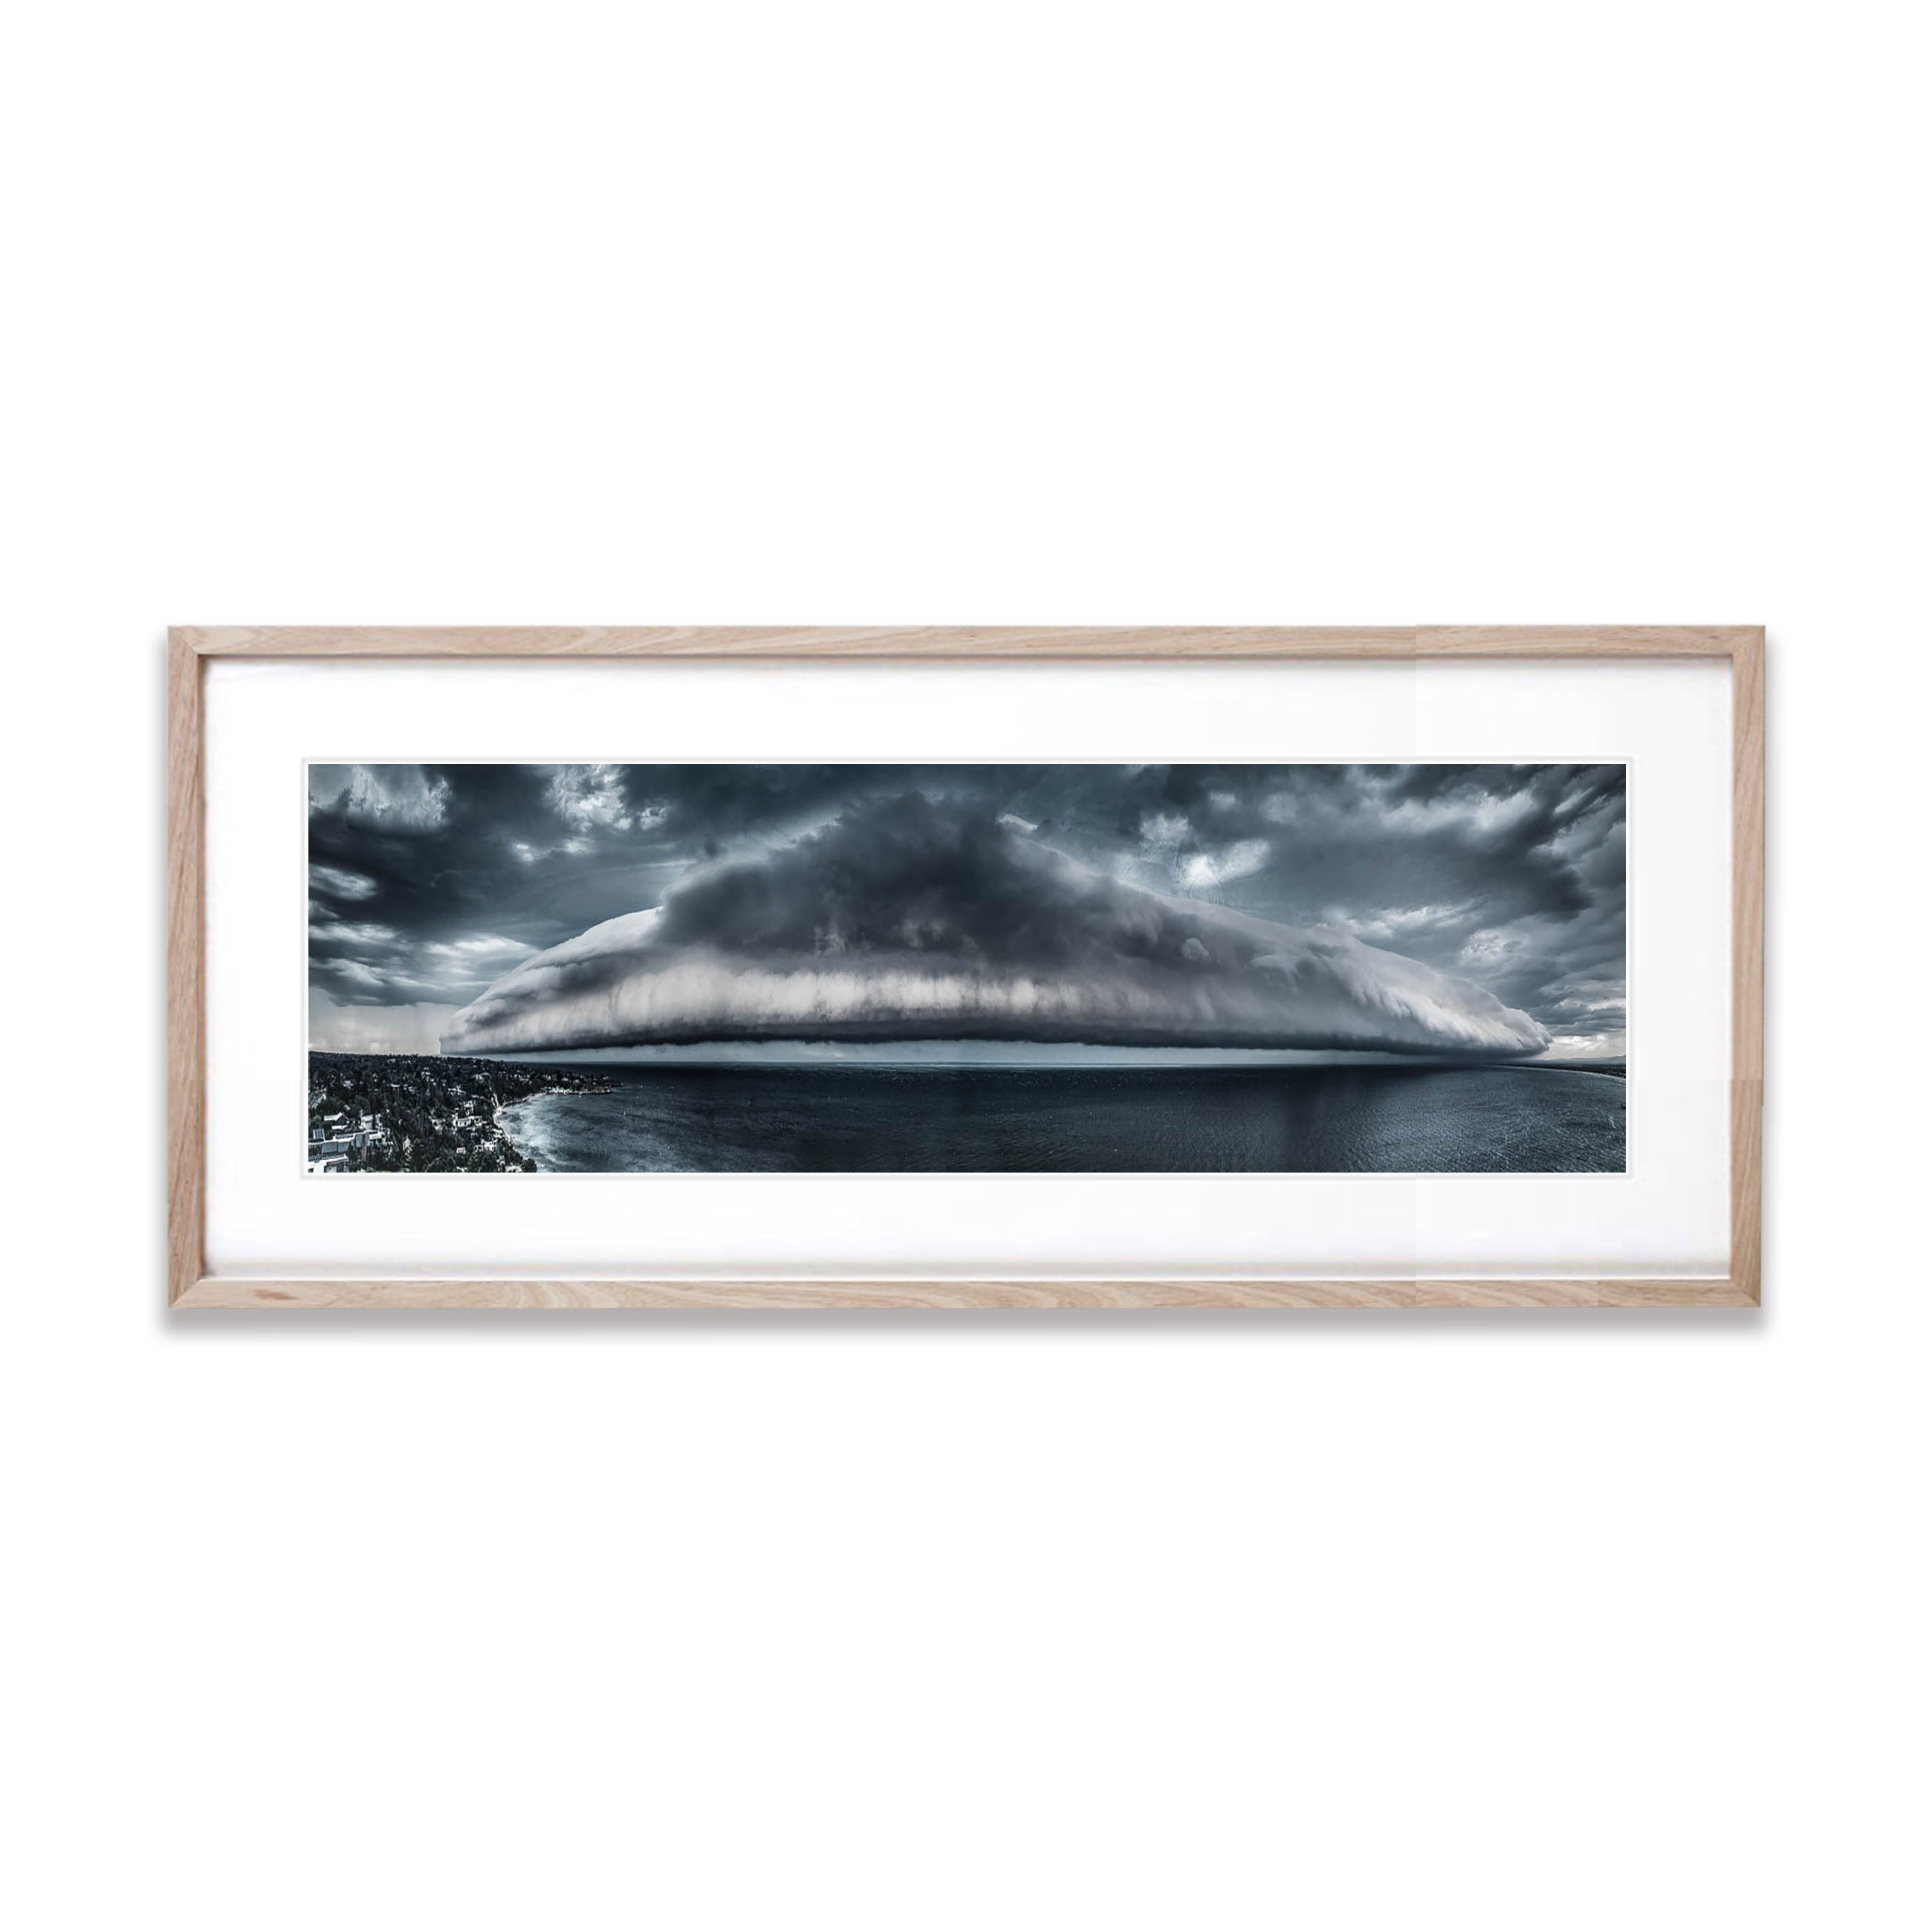 ARTWORK INSTOCK -  Shelf Cloud Panorama, Melbourne - 250 x 85cms CANVAS BLACK SHADOW BOX FRAME